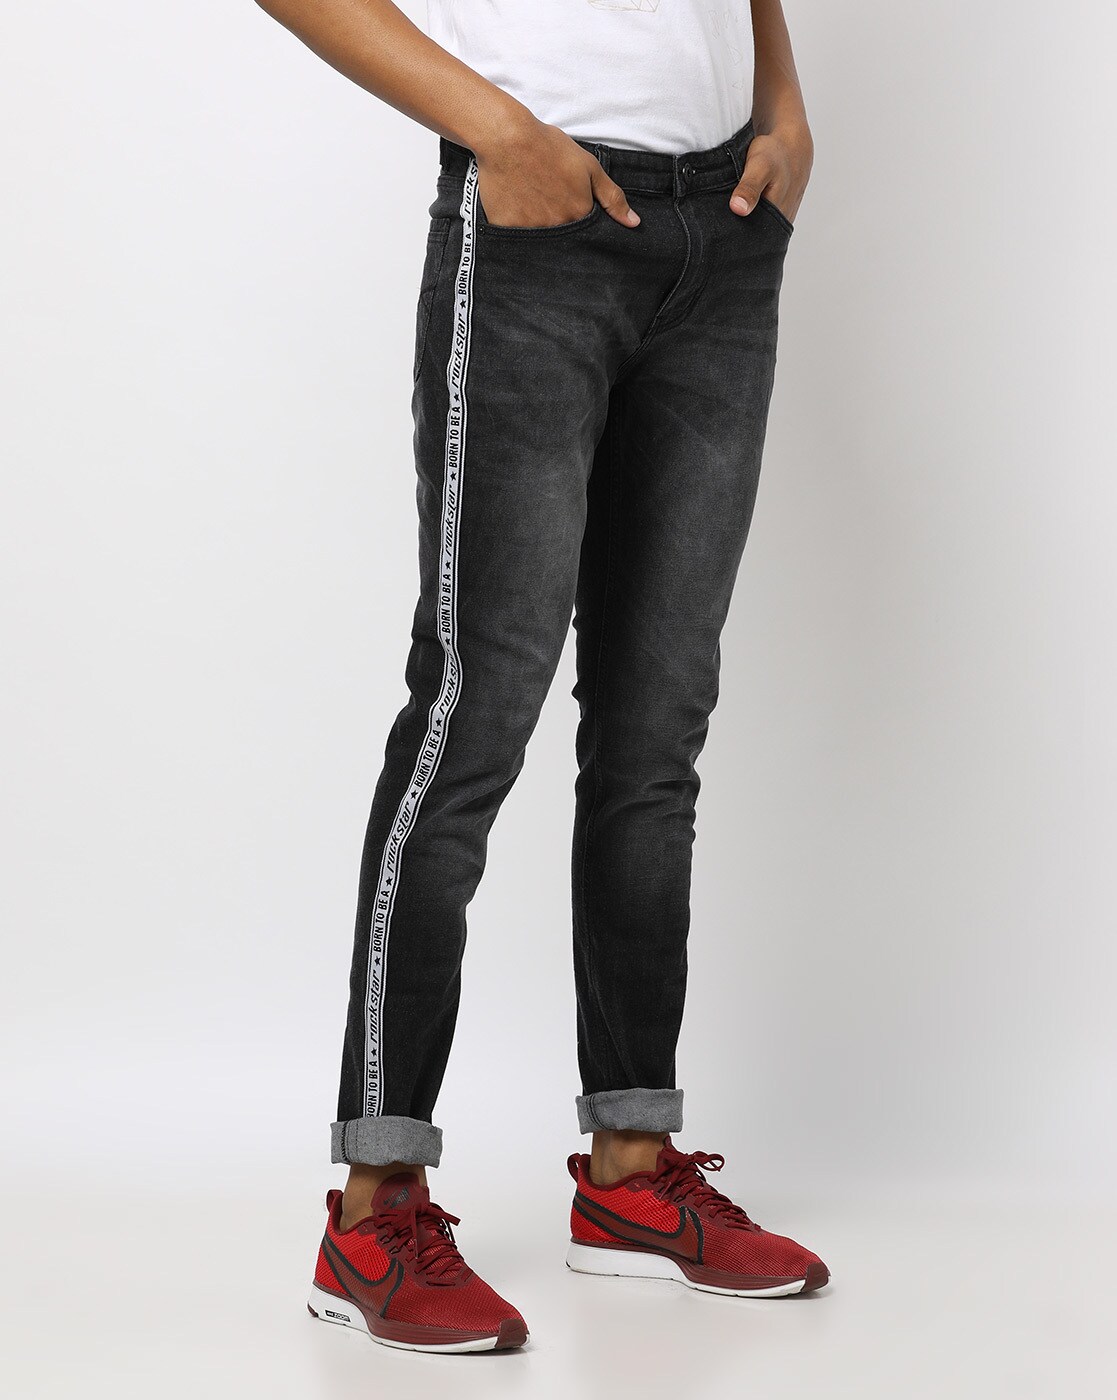 rockstar skinny jeans mens